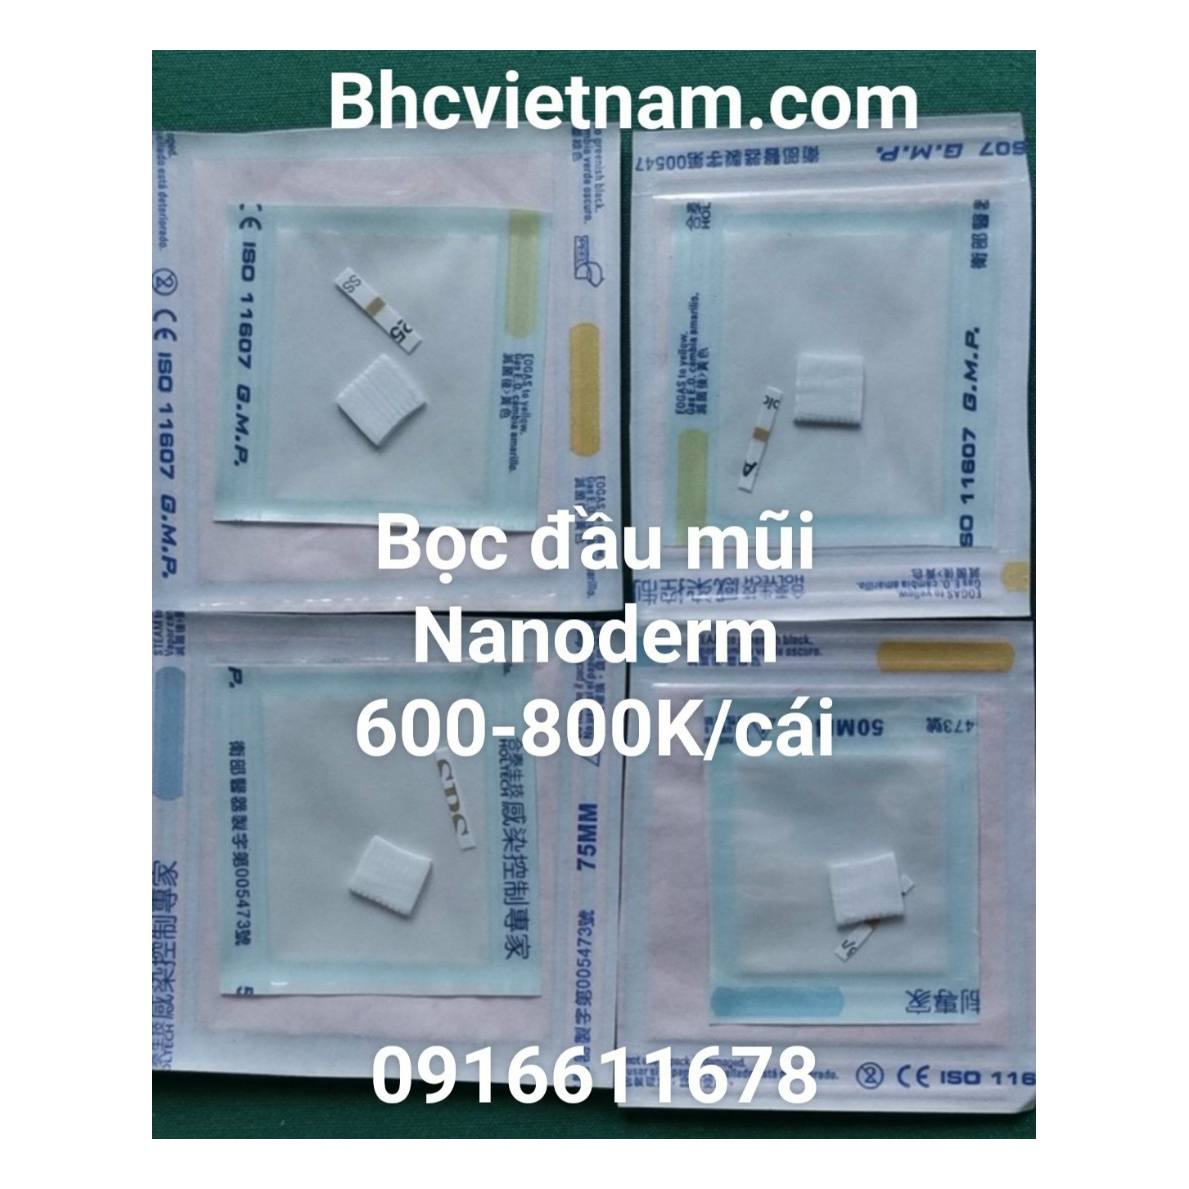 Mieng-nanoderm-boc-dau-mui-1x1cm/Mieng-nanoderm-boc-dau-mui-1-1cm